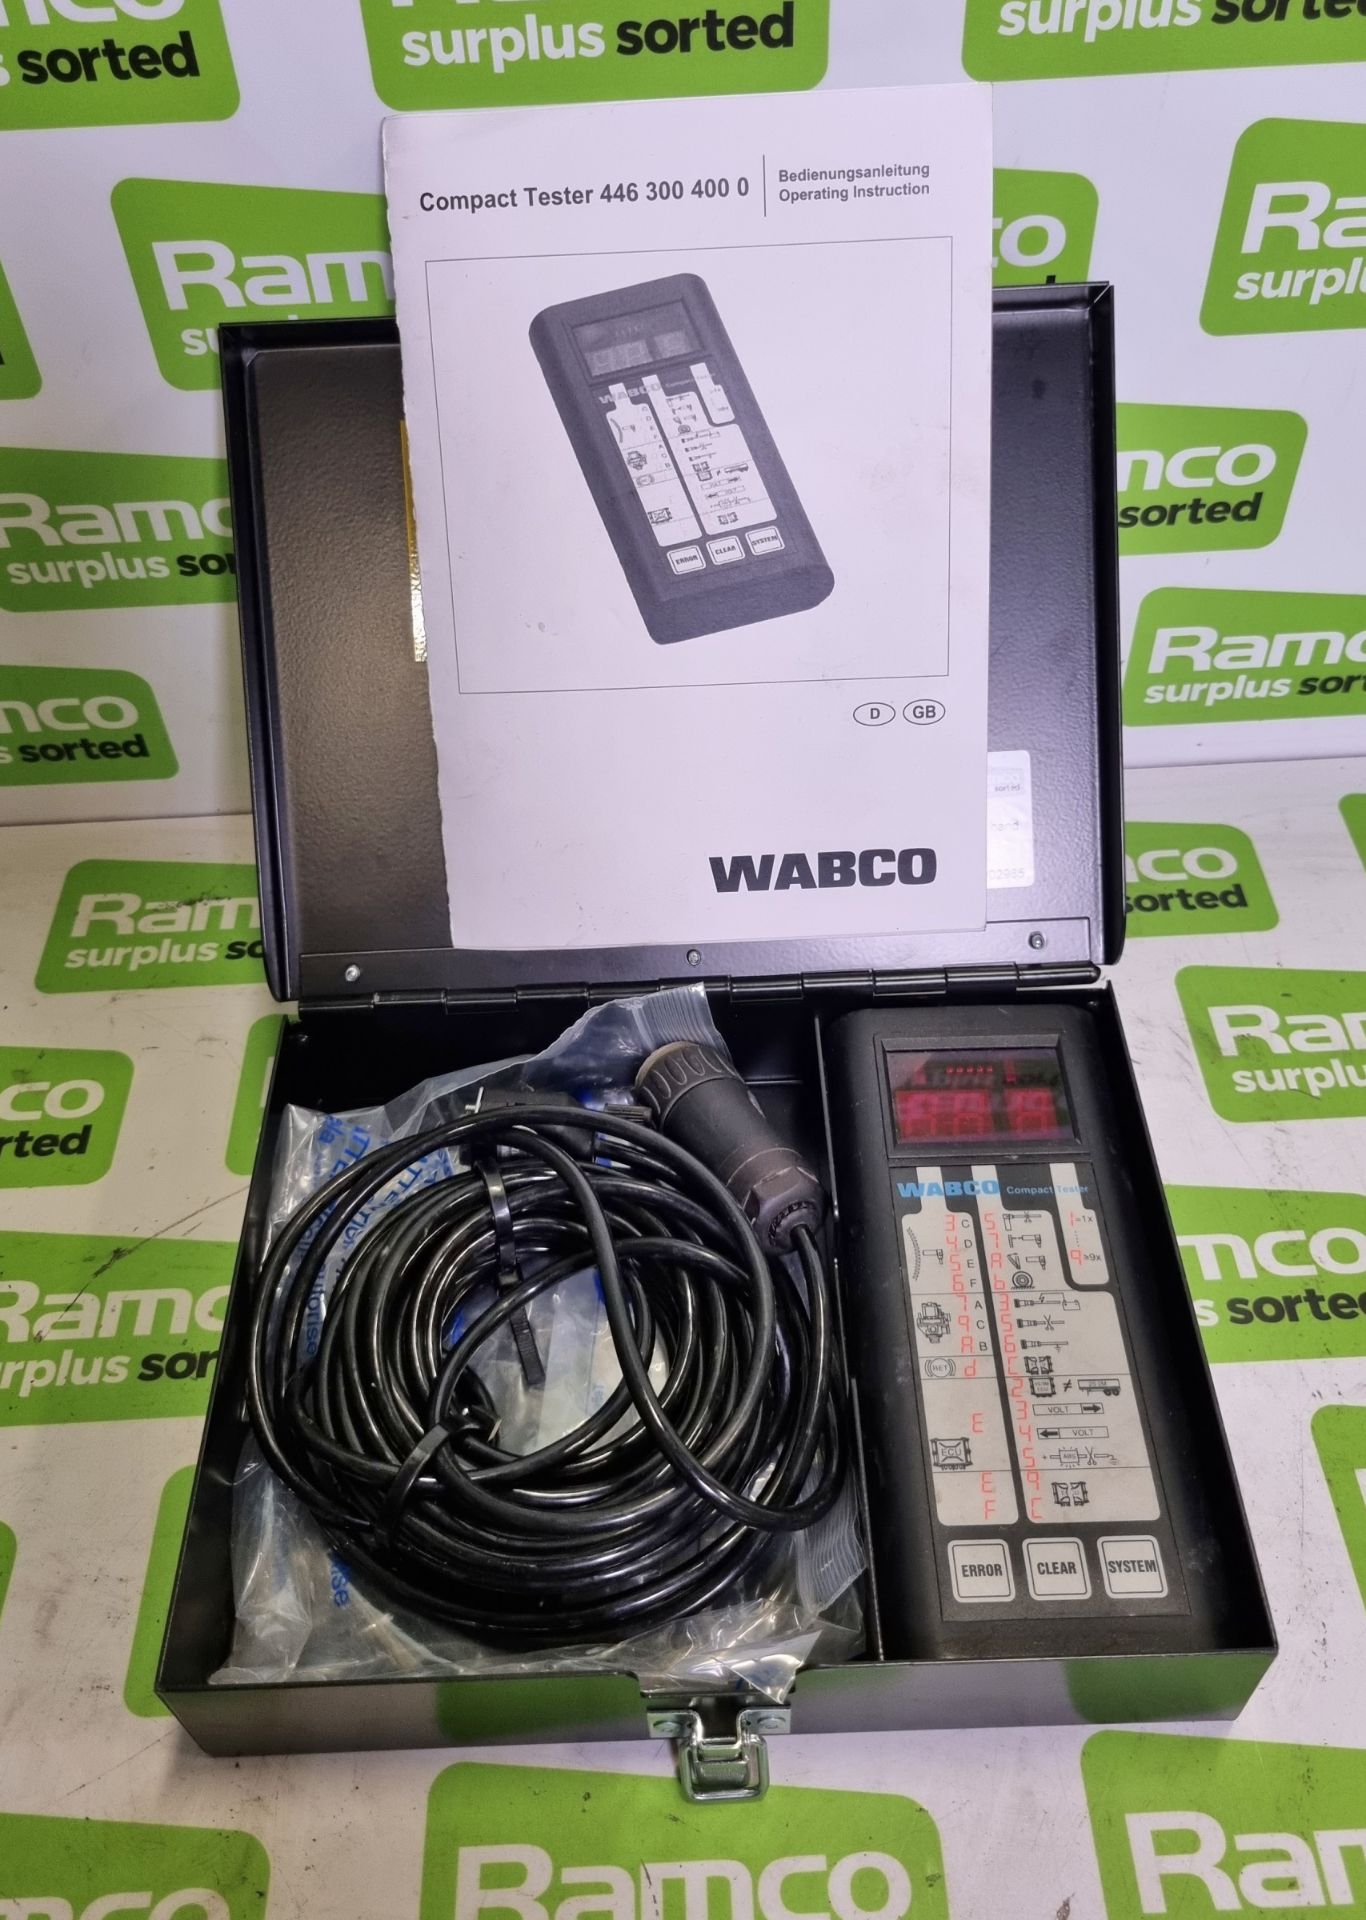 Wabco compact tester handheld